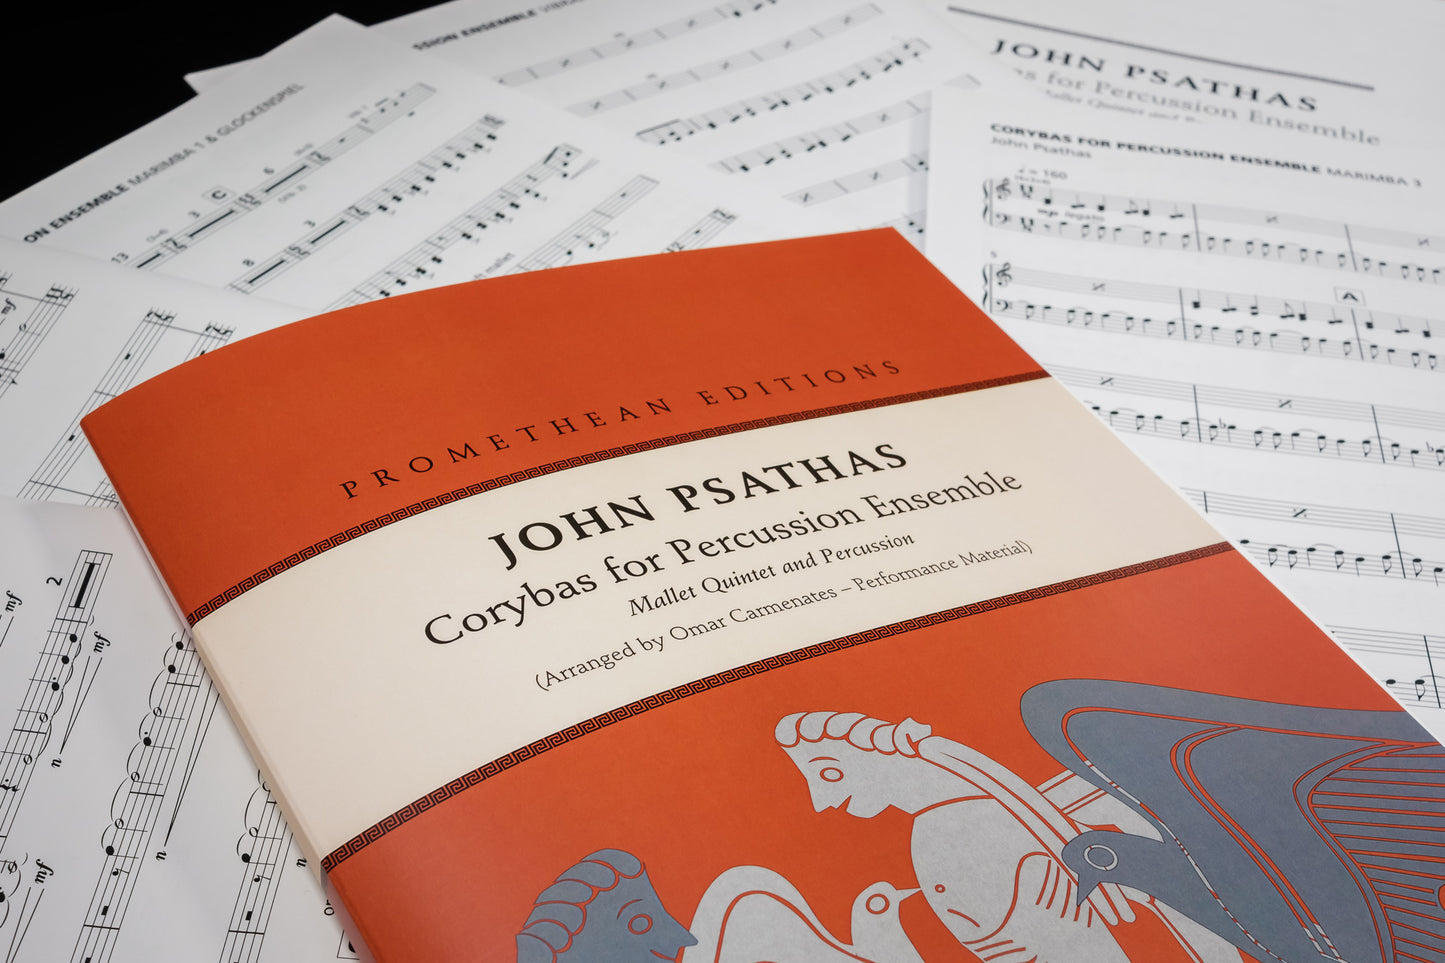 Corybas for Percussion Ensemble